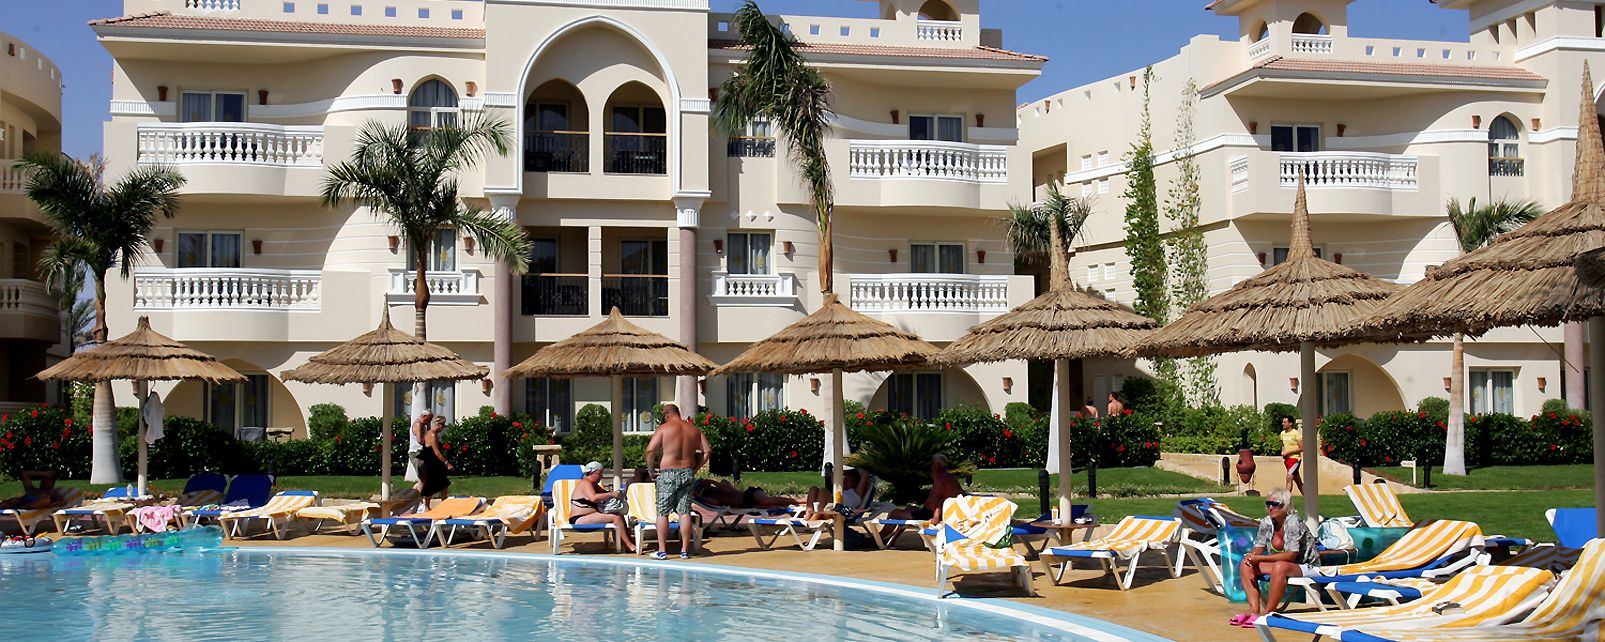 Hotel Tropicana Azure Club